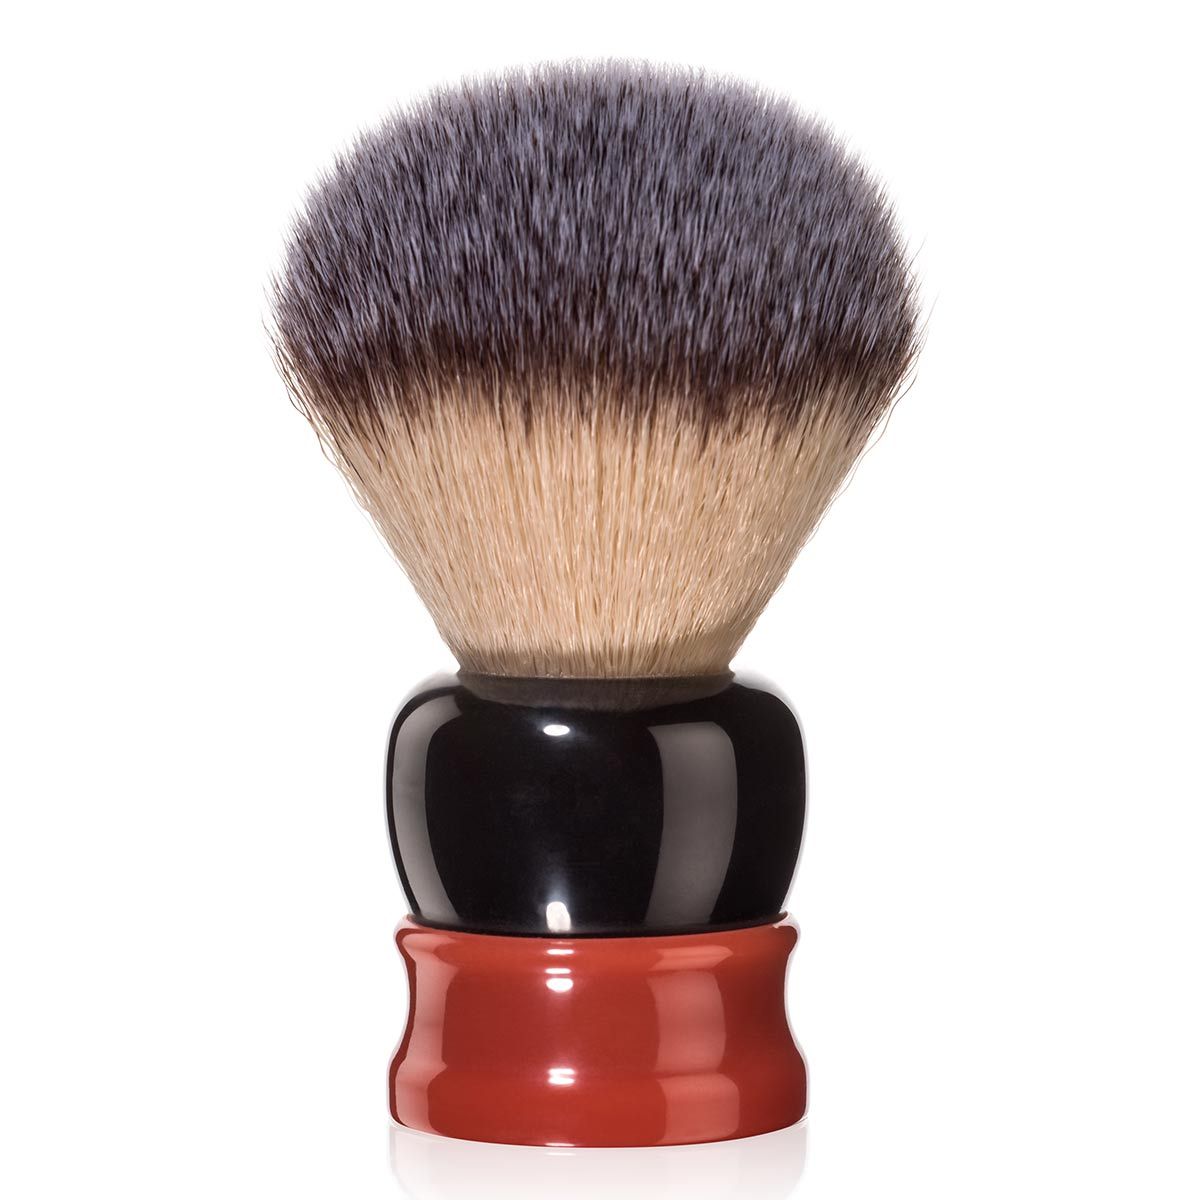 Primary image of Orange + Brown Stout Shaving Brush